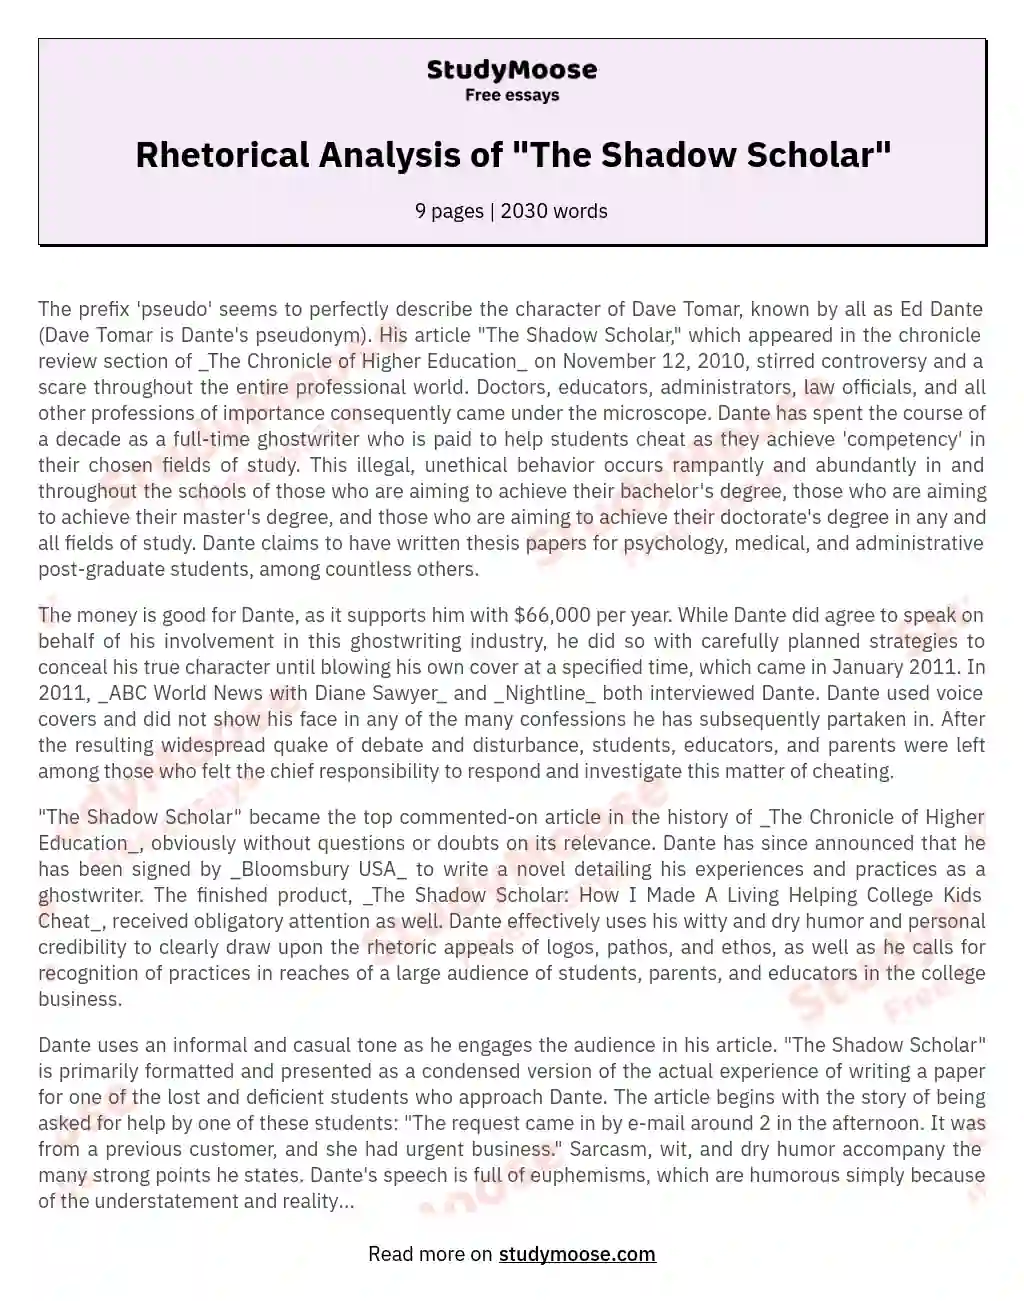 Rhetorical Analysis of "The Shadow Scholar"